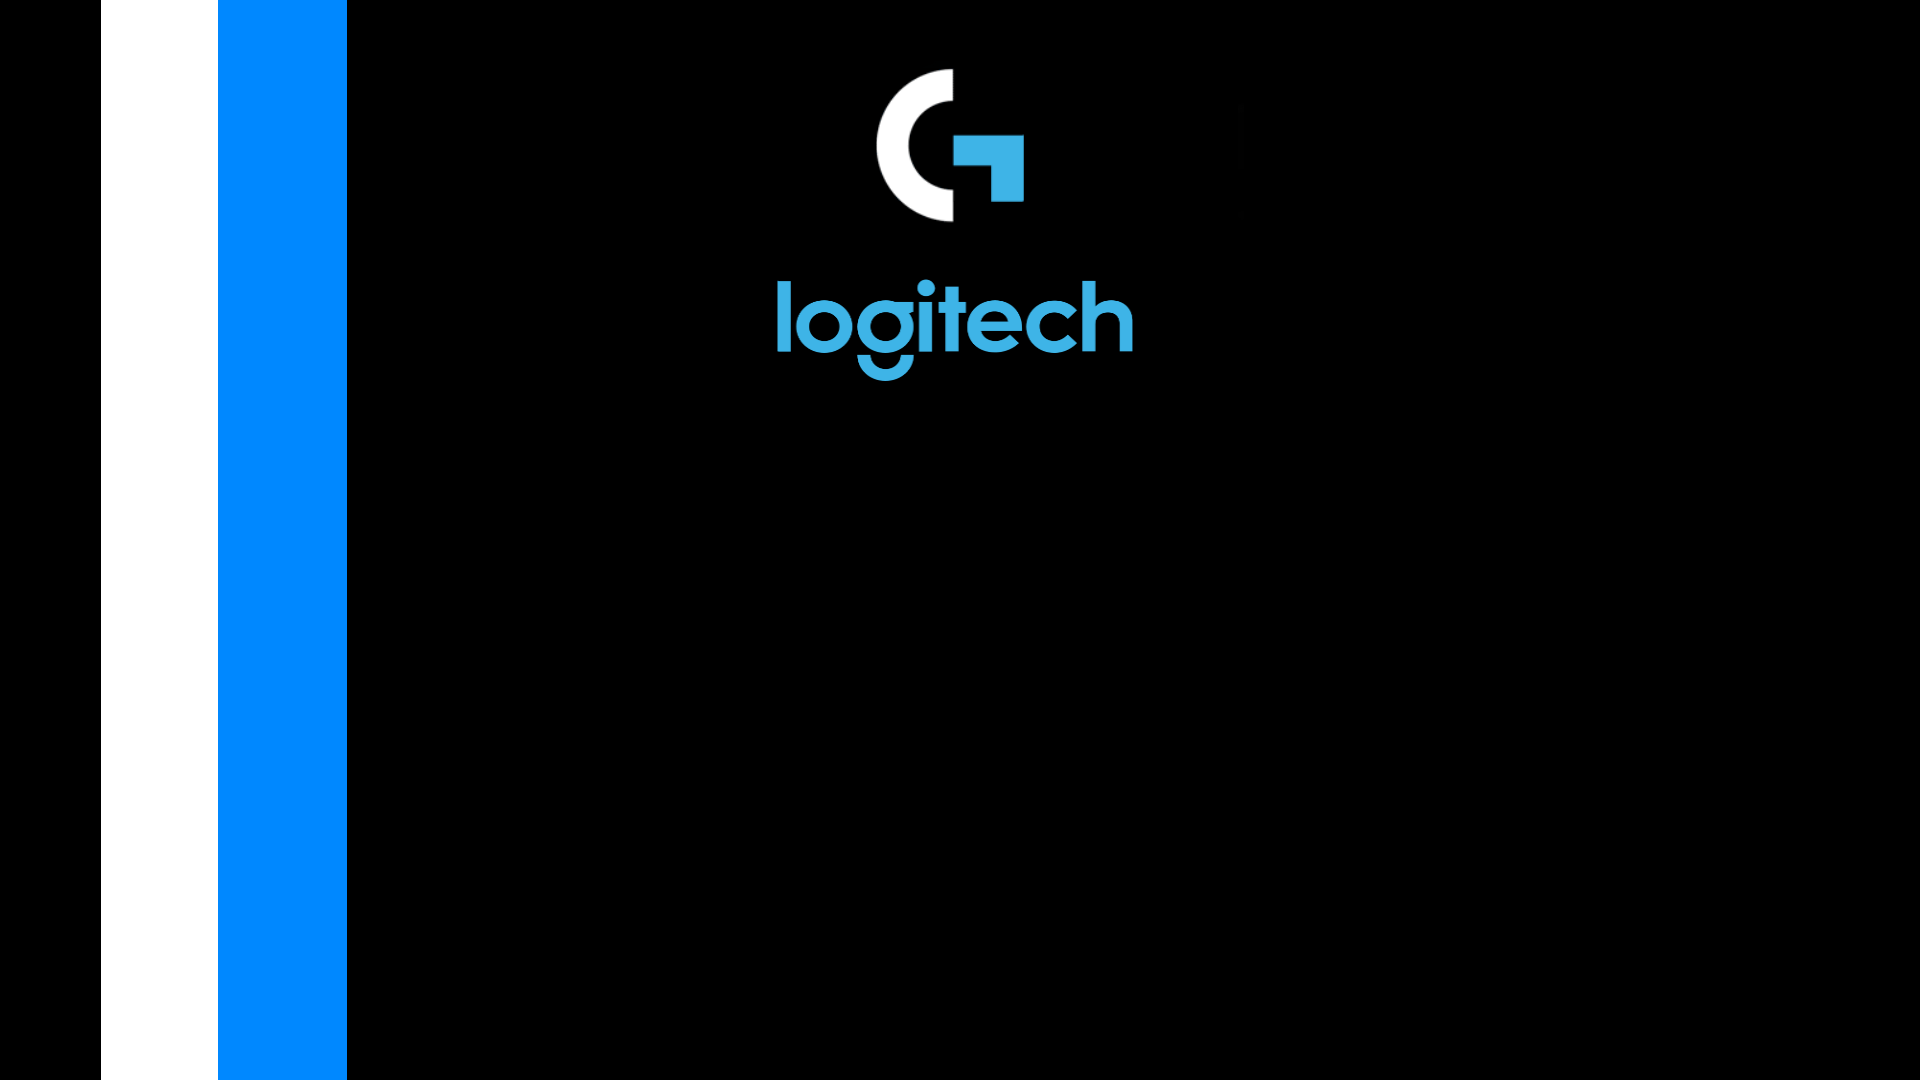 logitech backgrounds